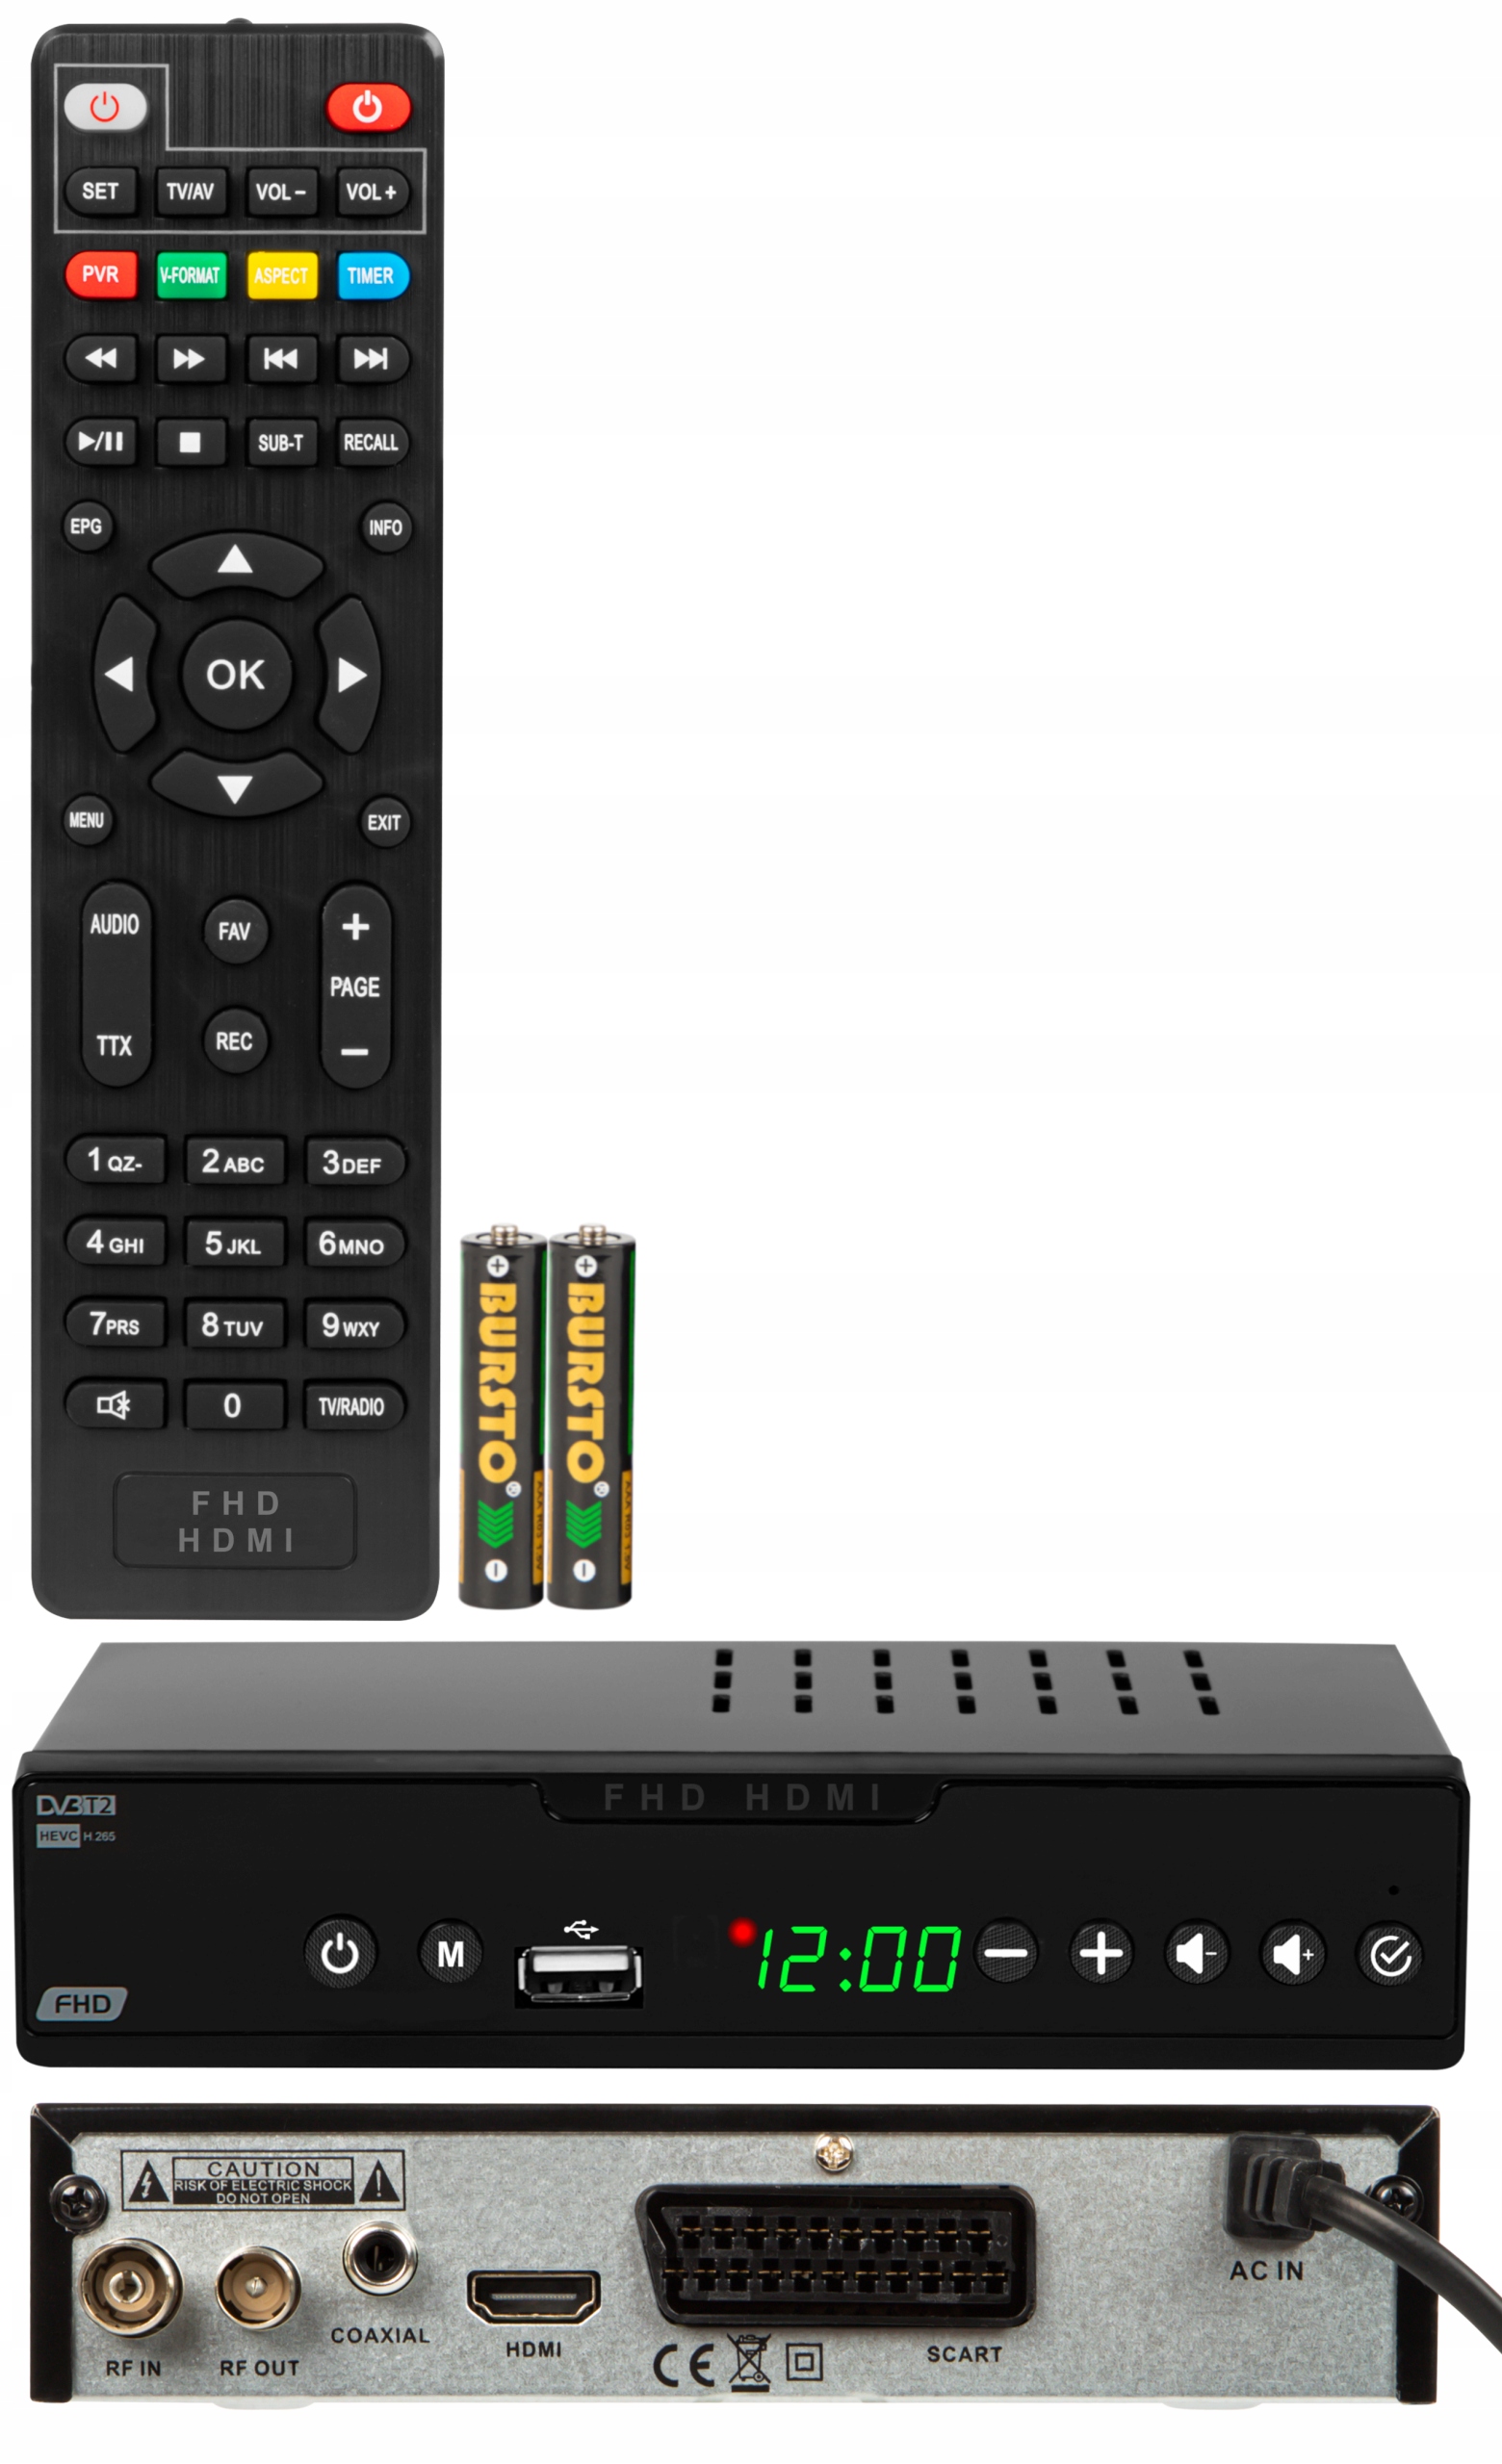 MAA-TELERI DEKOODER DVB-T2 HEVC H.265 TUNER HDMI SCART USB FULL HD KAUGJUHTID Tuneri tüüp DVB-T2